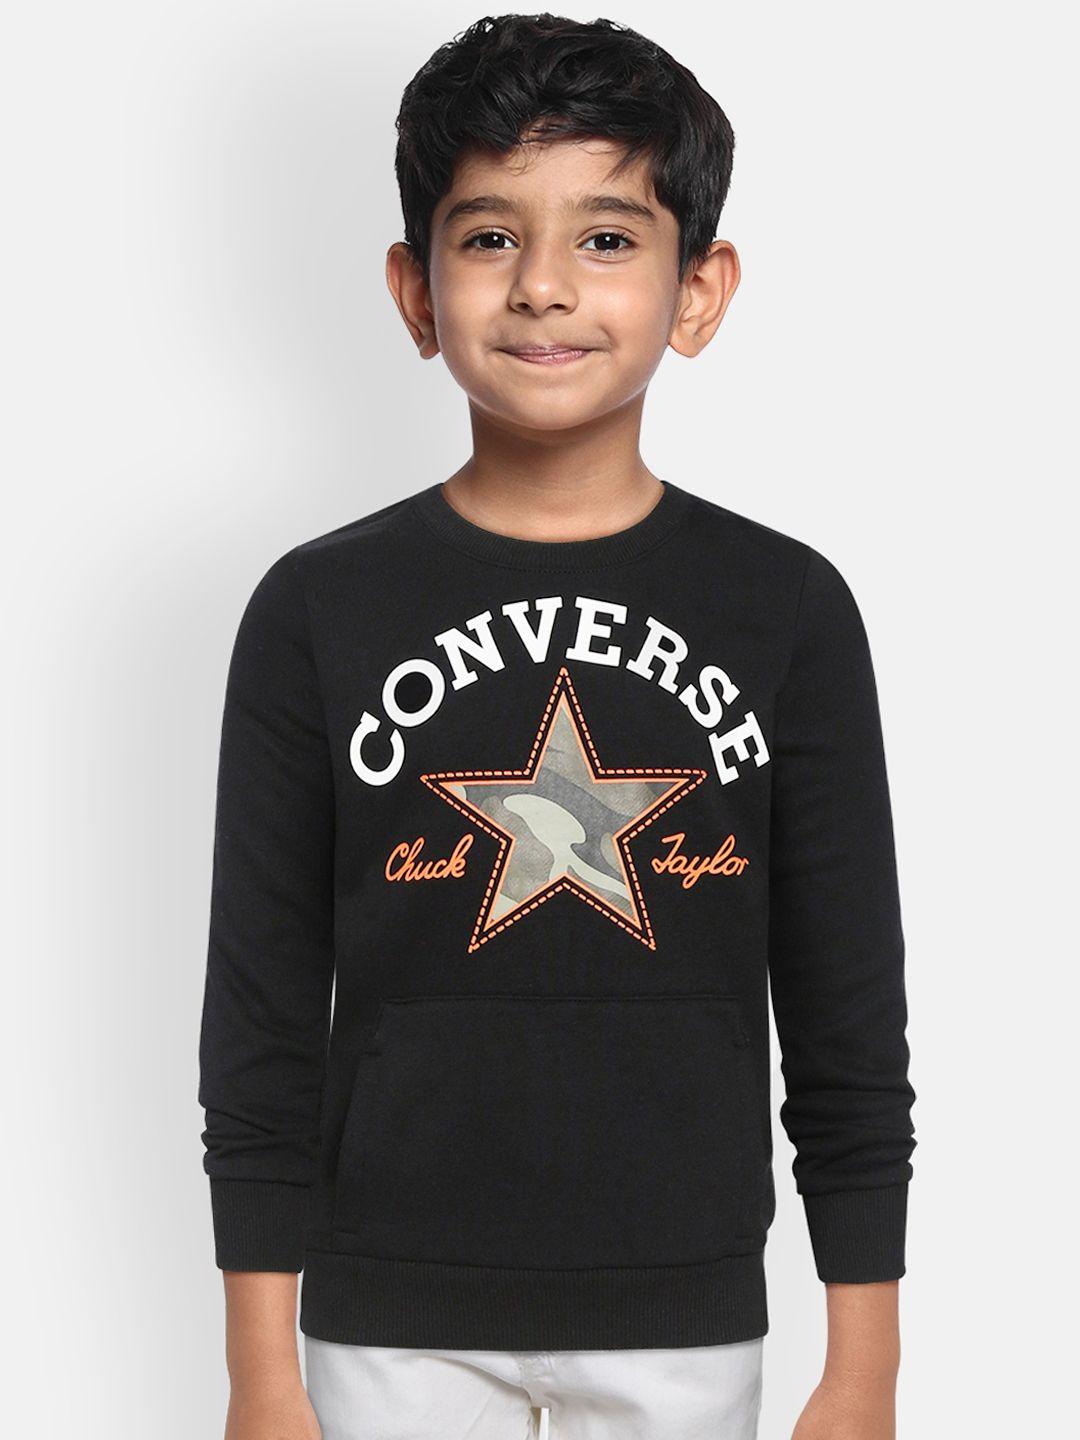 converse boys black & white brand logo print sweatshirt